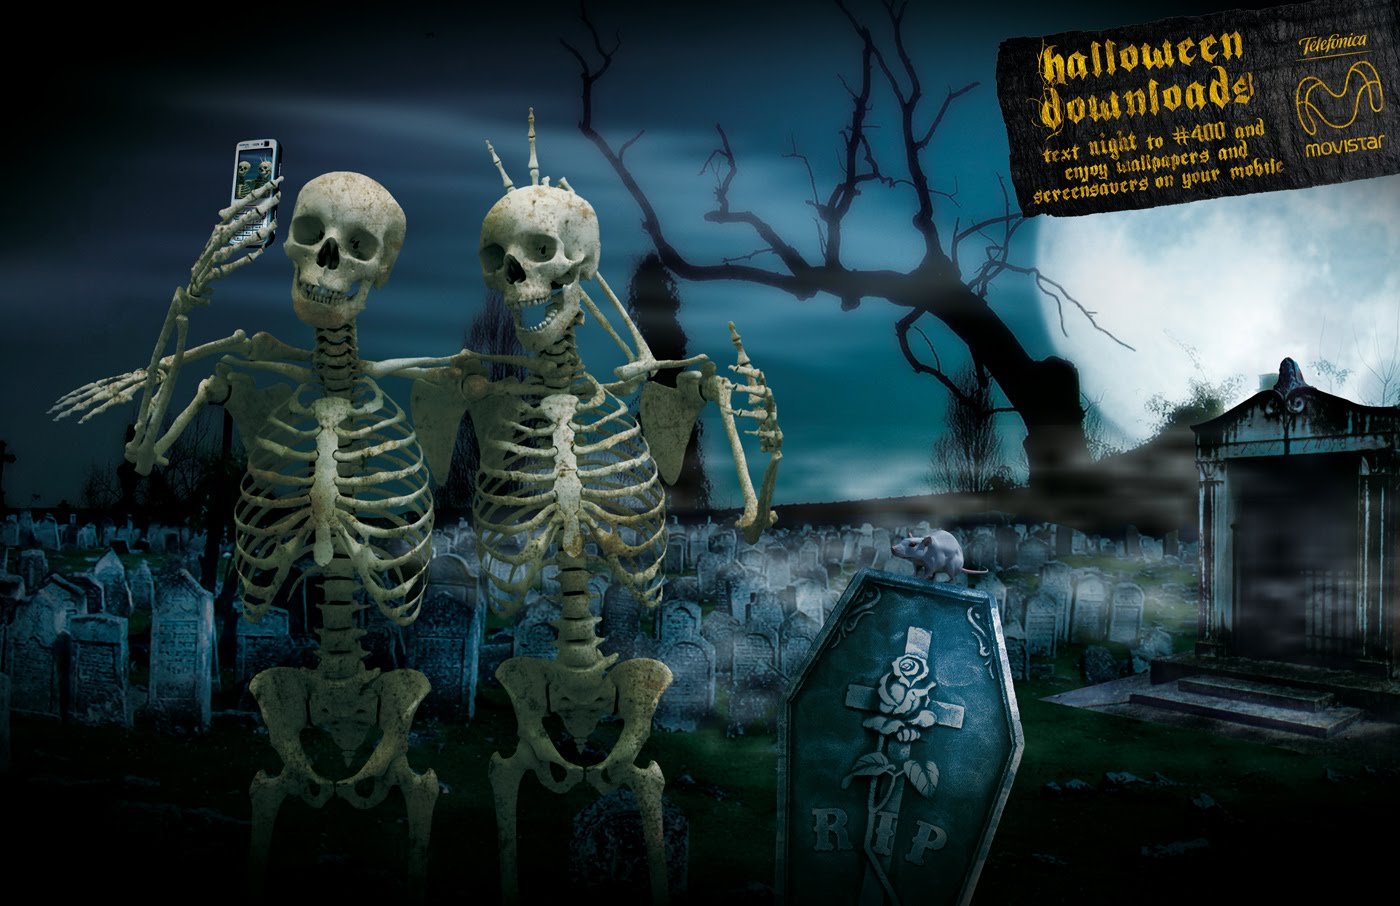 Skeleton Wallpaper Browse Skeleton Wallpaper with collections of Aesthetic  Black Halloween Skelet  Arte com caveiras Papel de parede celular  Imagens de vôlei